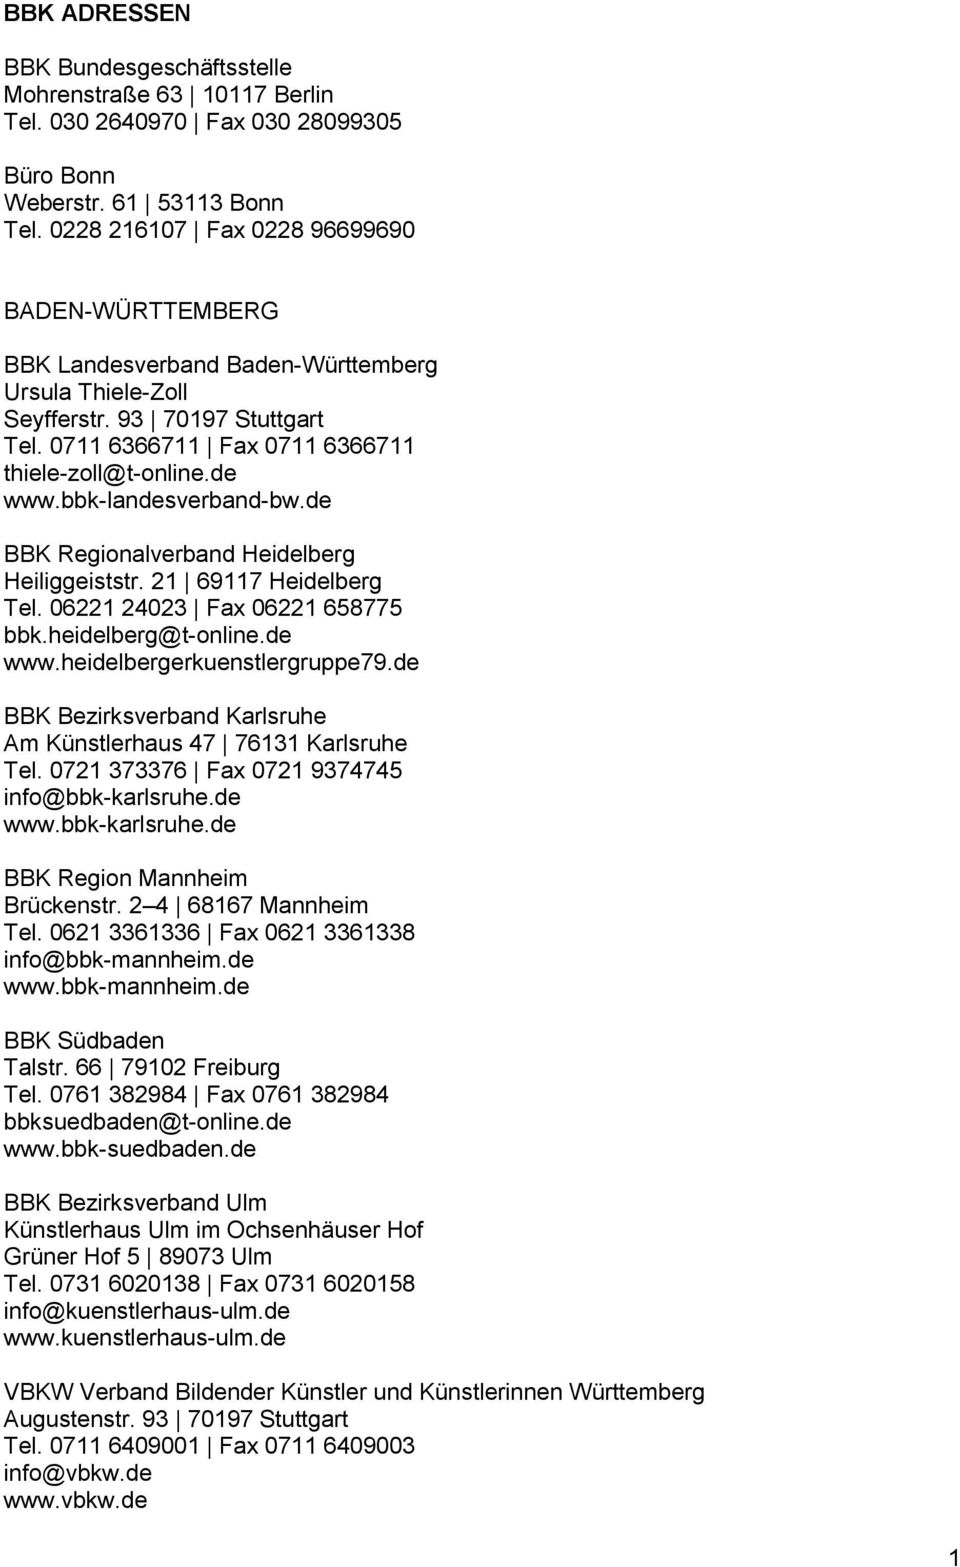 bbk-landesverband-bw.de BBK Regionalverband Heidelberg Heiliggeiststr. 21 69117 Heidelberg Tel. 06221 24023 Fax 06221 658775 bbk.heidelberg@t-online.de www.heidelbergerkuenstlergruppe79.